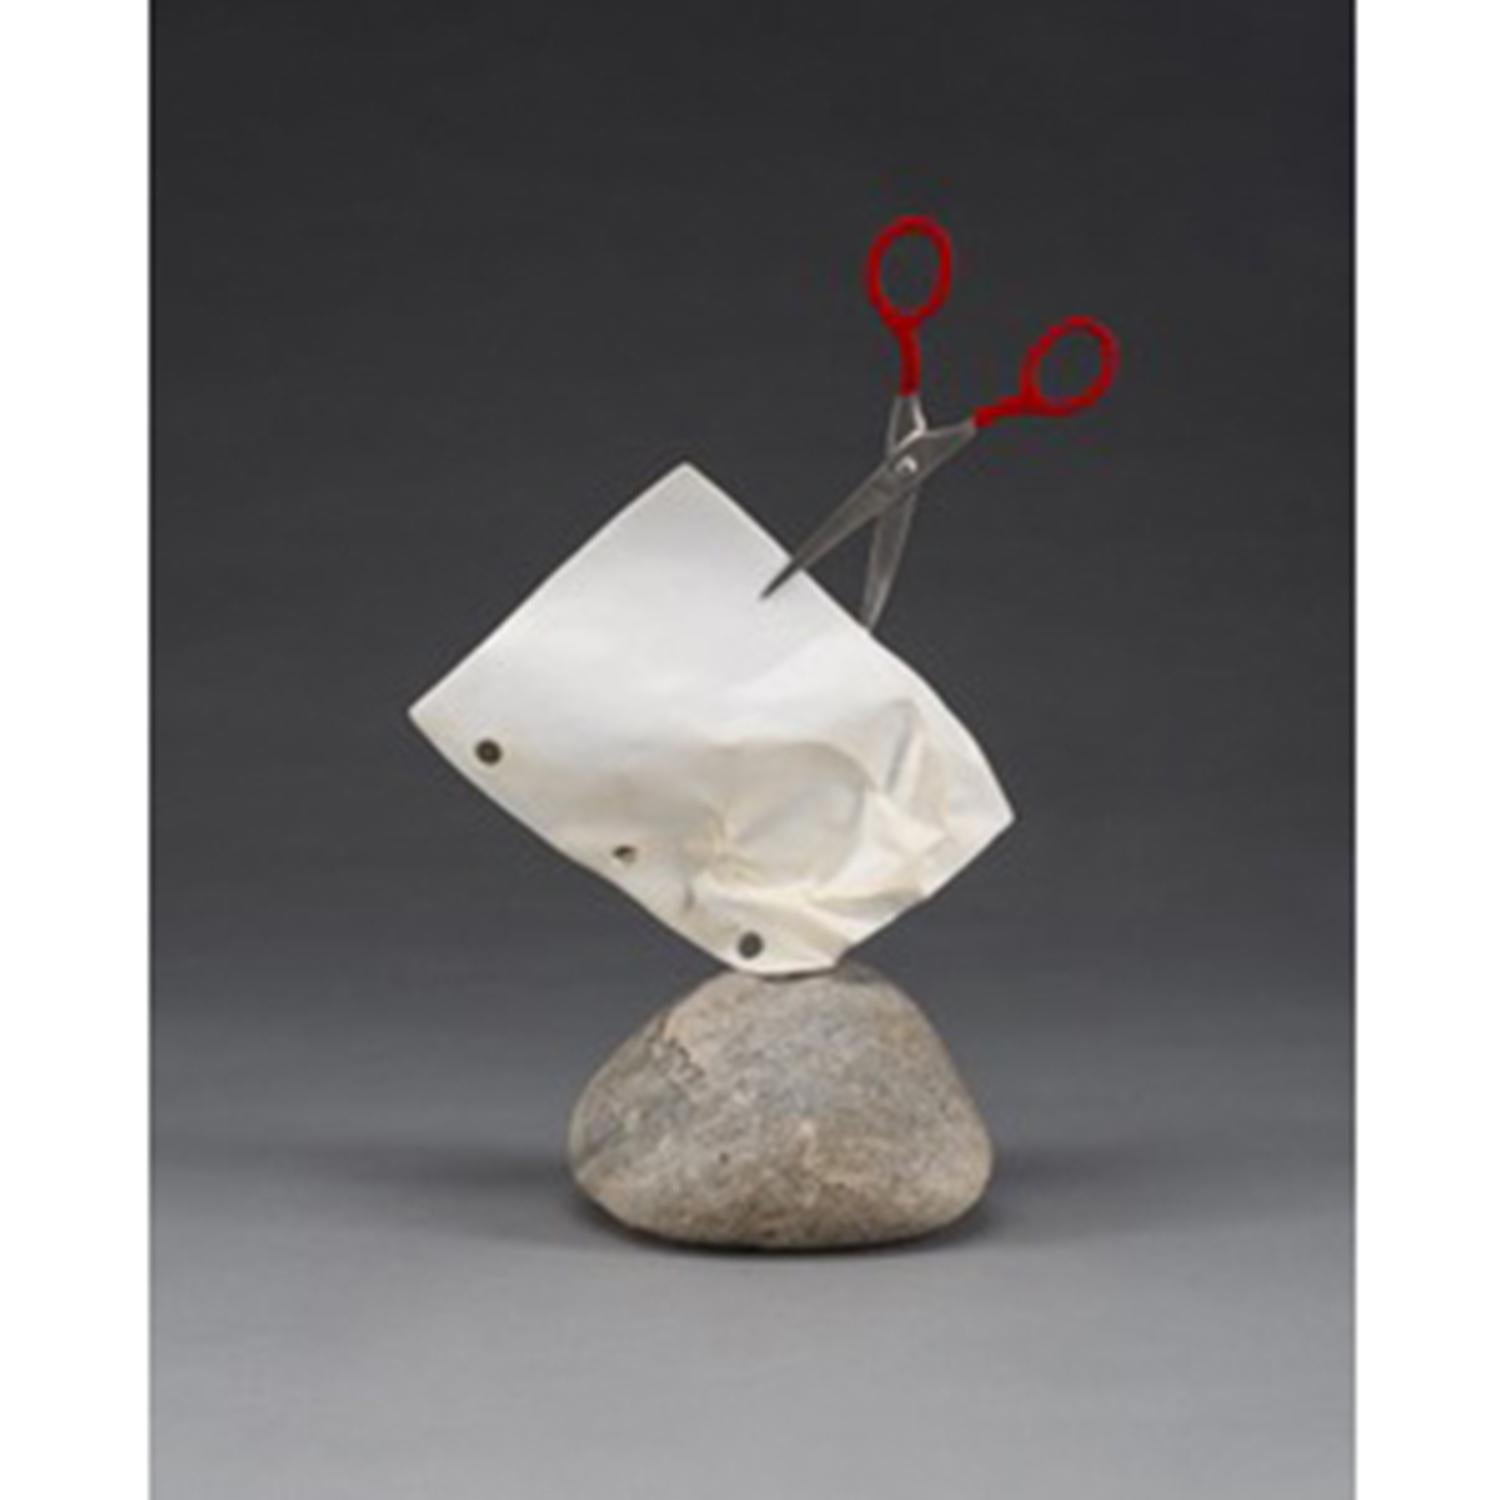 Kevin Box Figurative Sculpture – Schere aus Steinpapier (Mini) #66 op/ed 